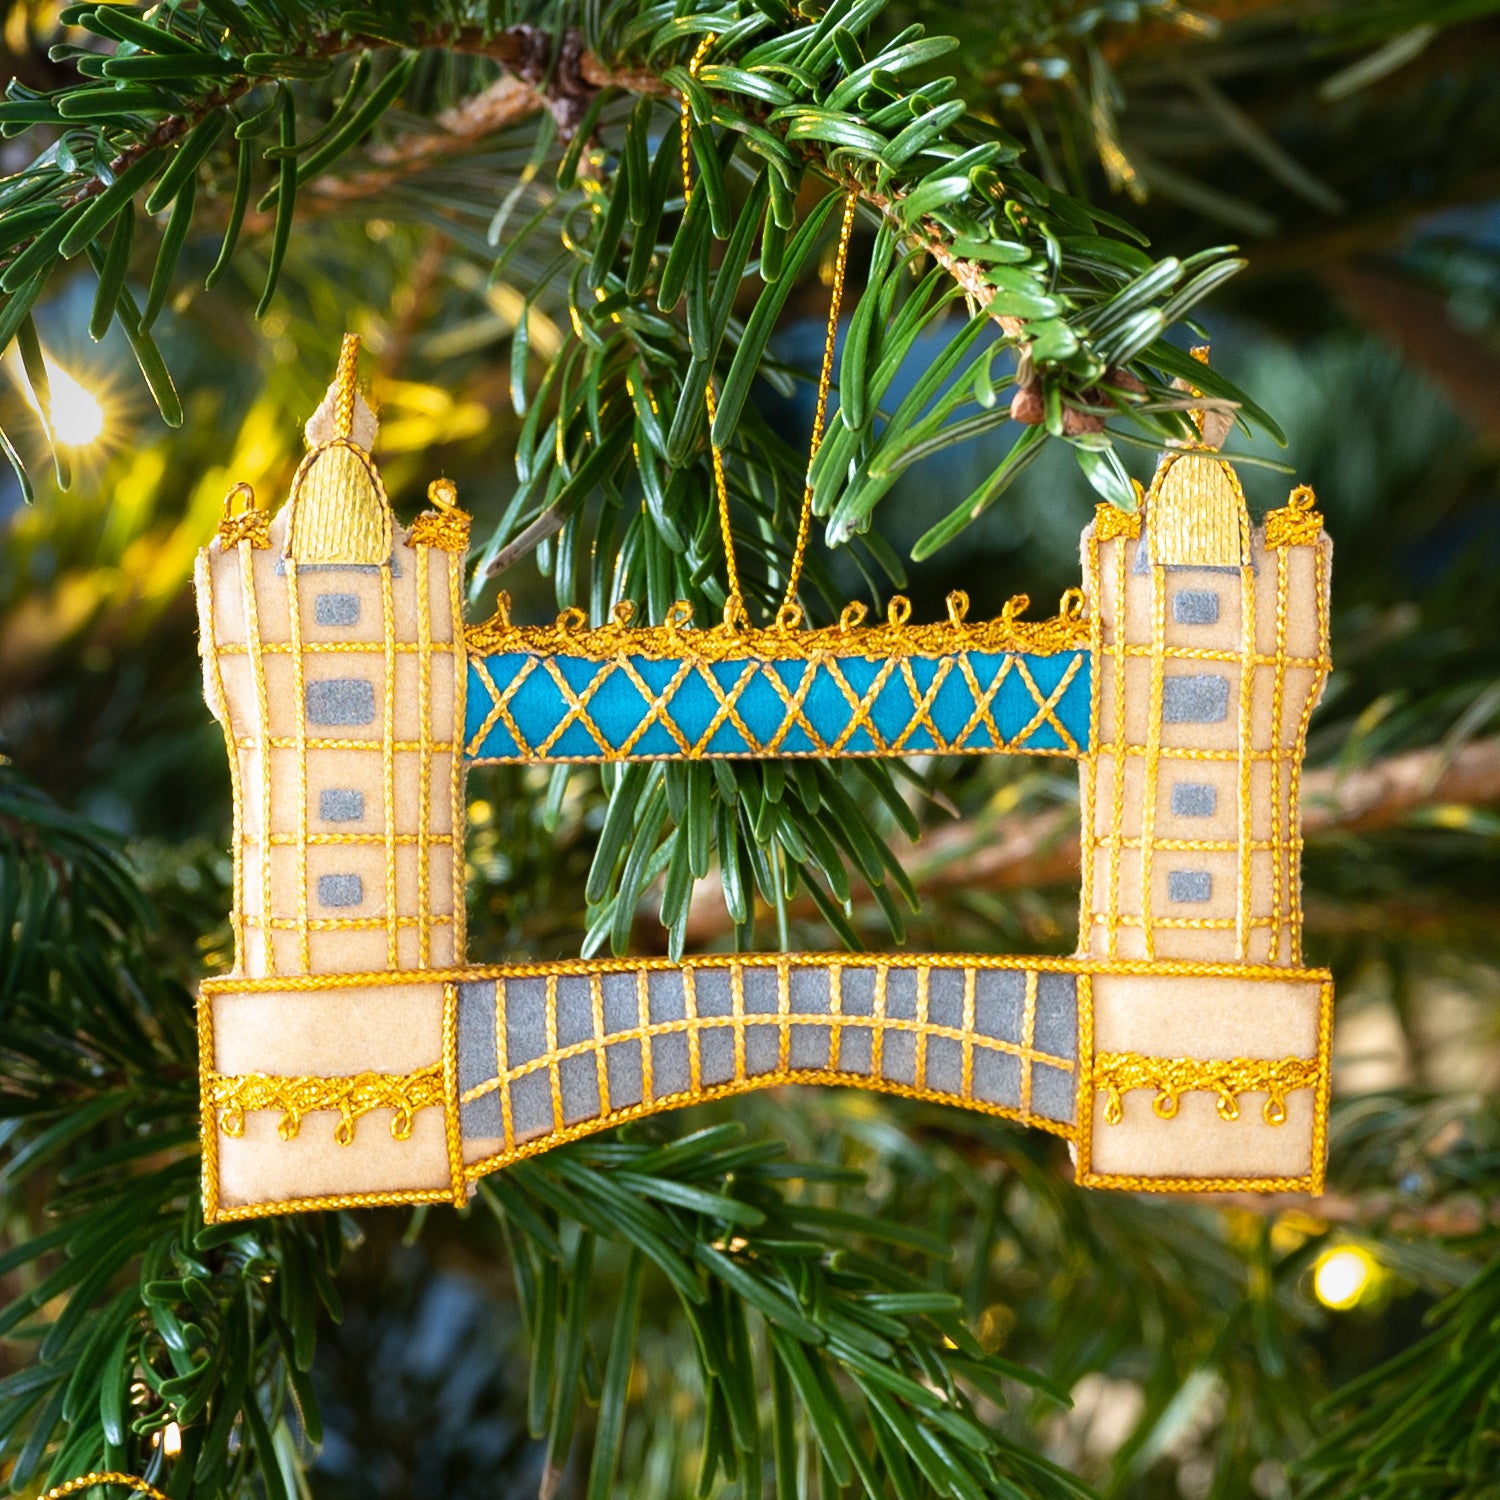 Tower Bridge Decoration hanging from Christmas tree